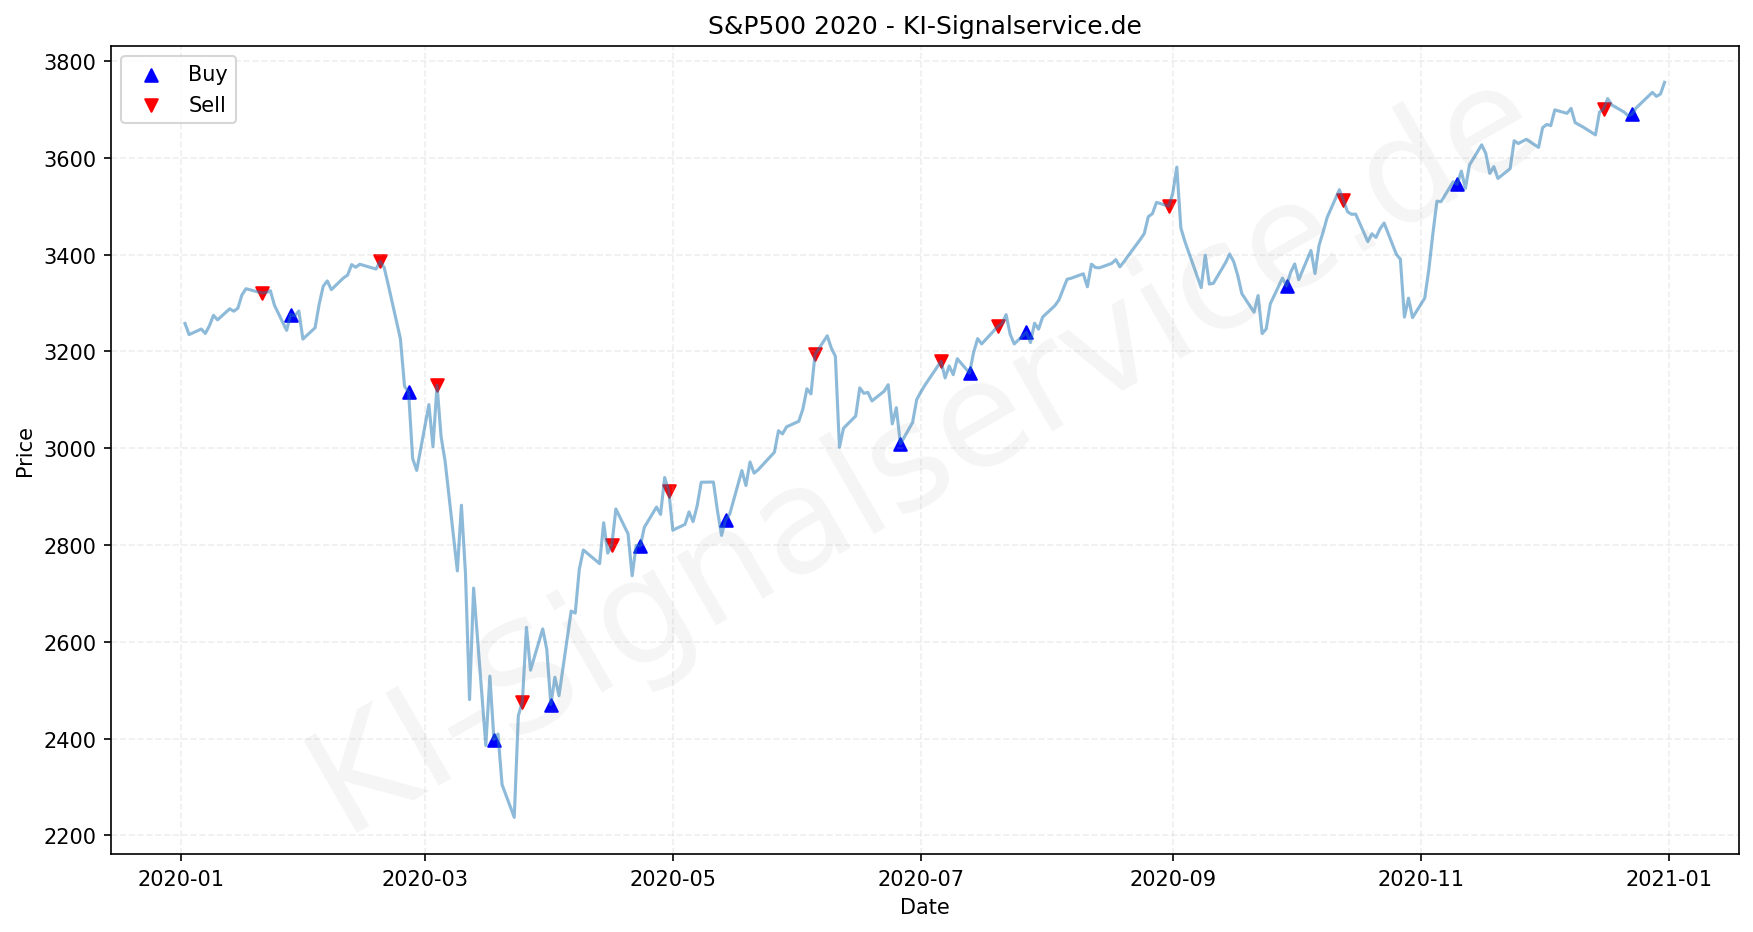 SP500 Index Performance Chart - KI Tradingsignale 2020